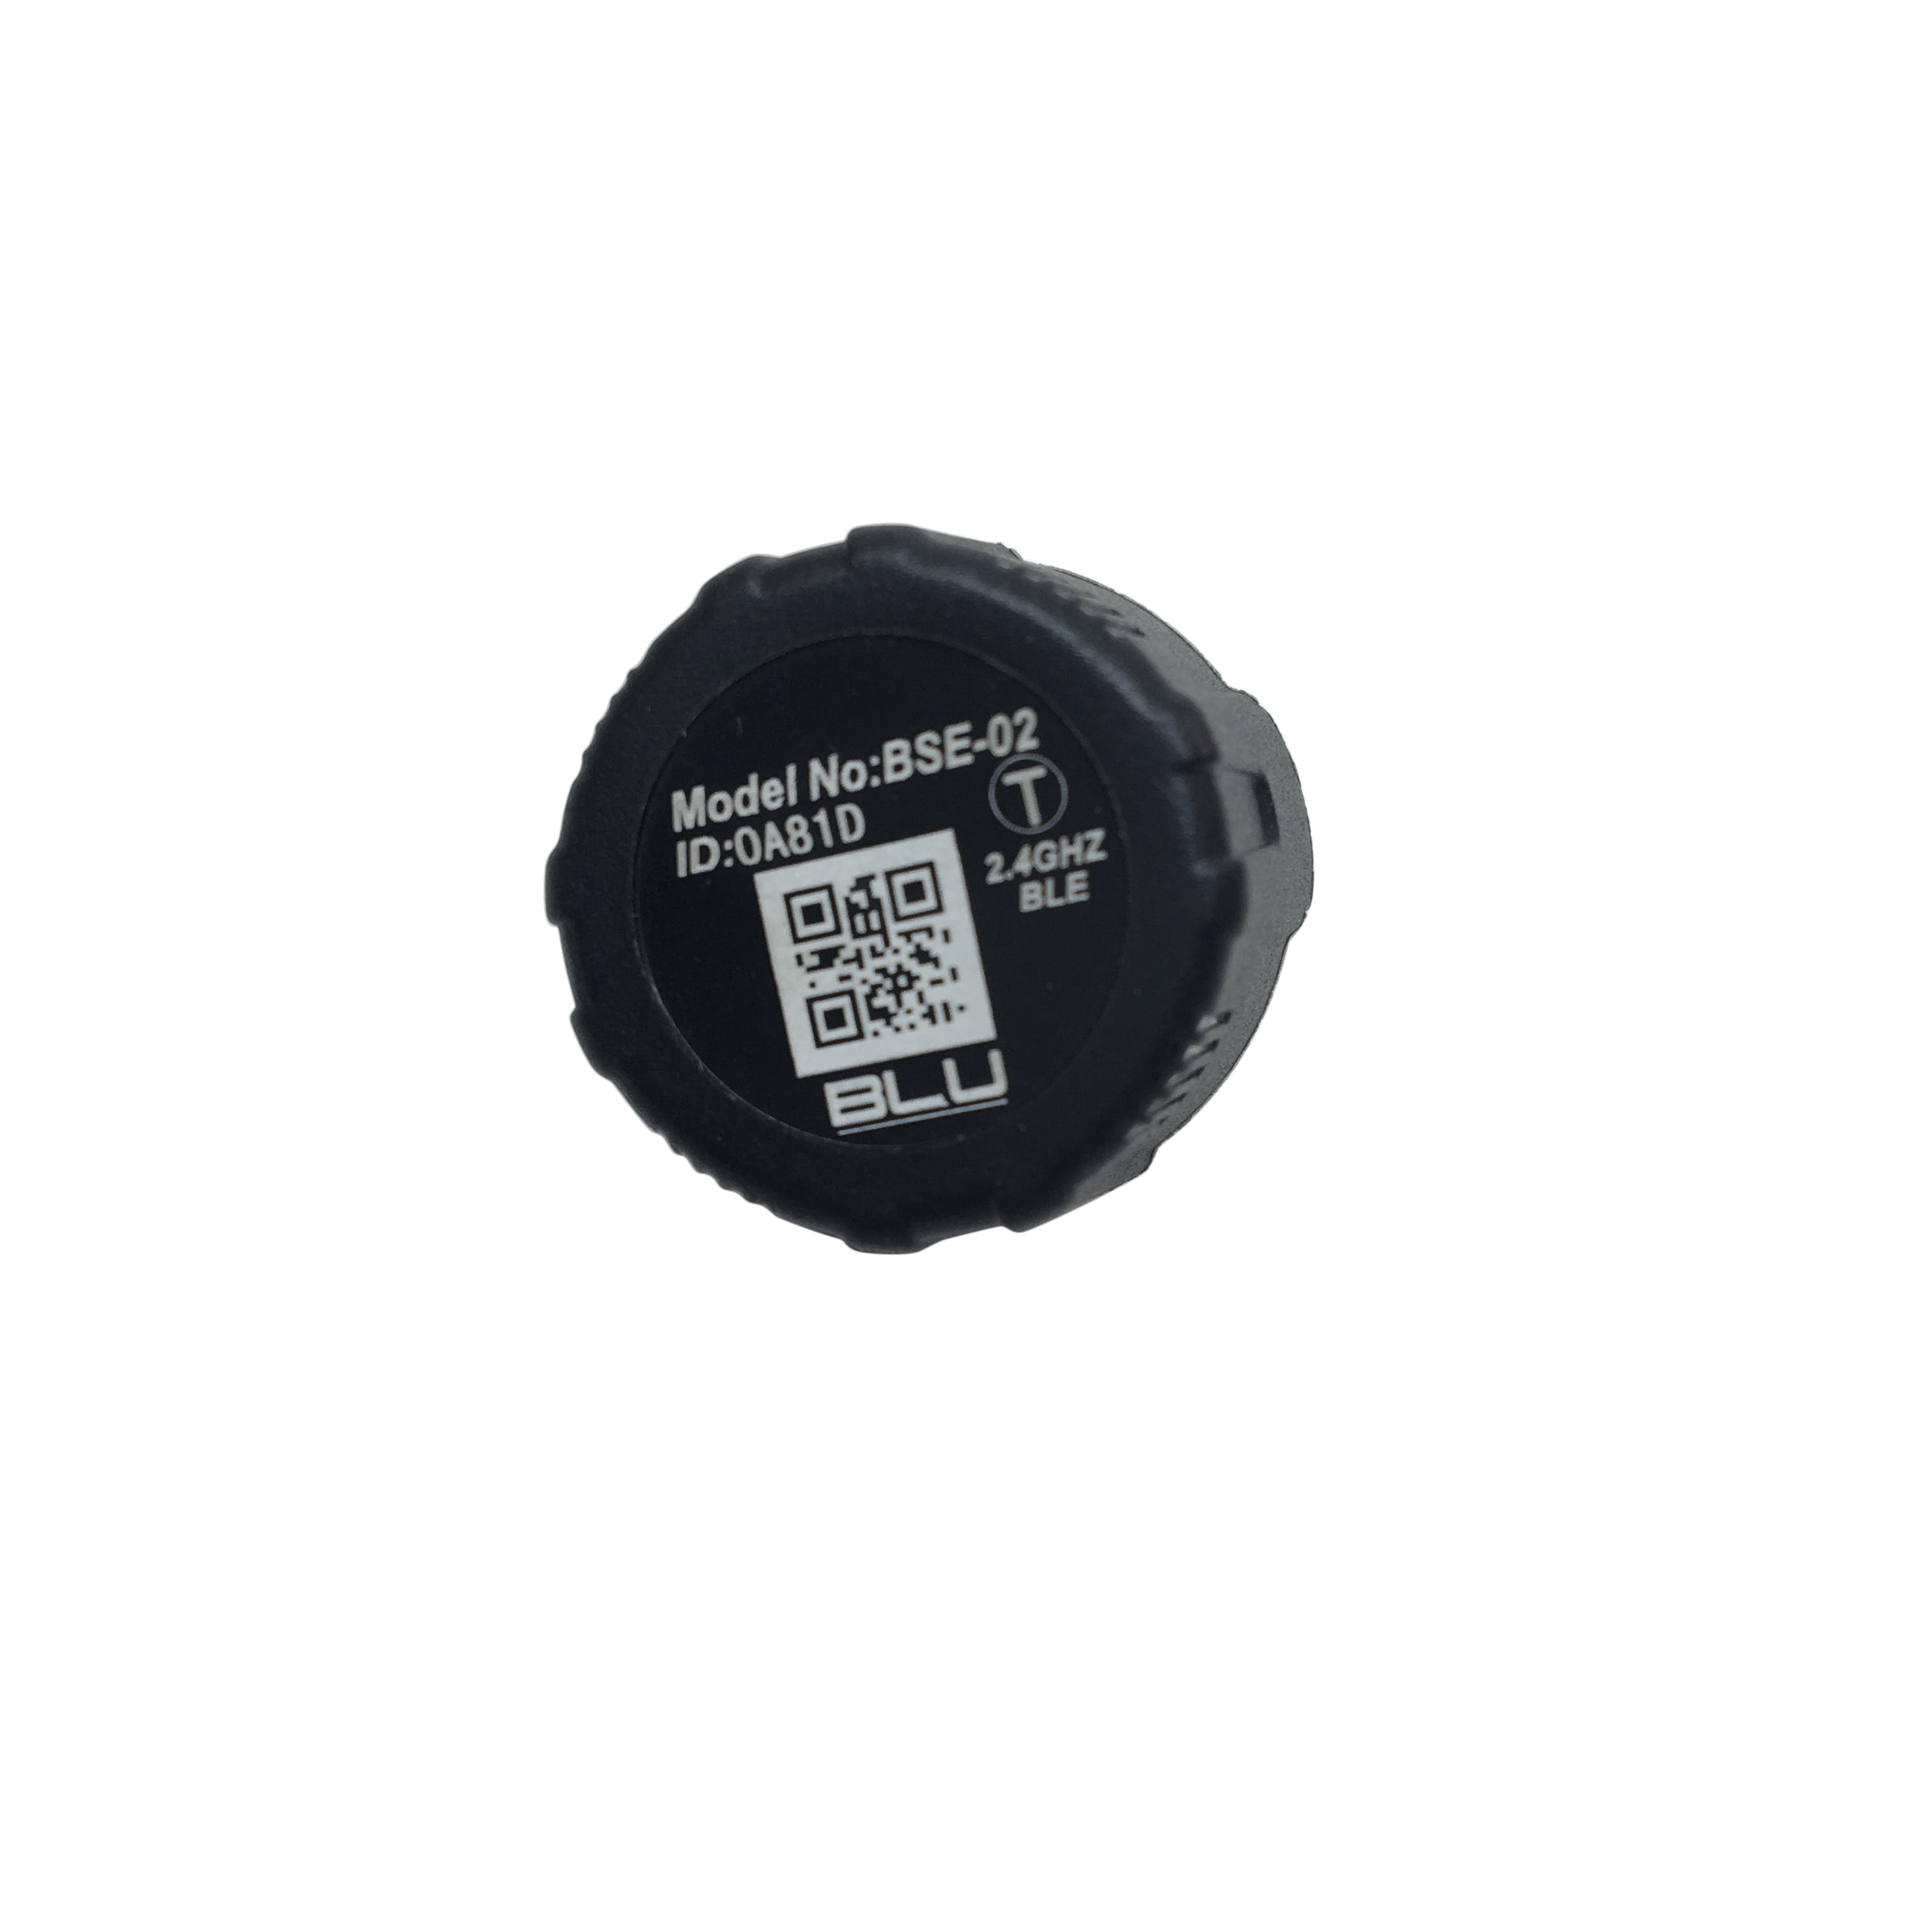 Trigger 504150 Tire Pressure Monitoring System Kit Bluetooth 4 pc External Set 150psi